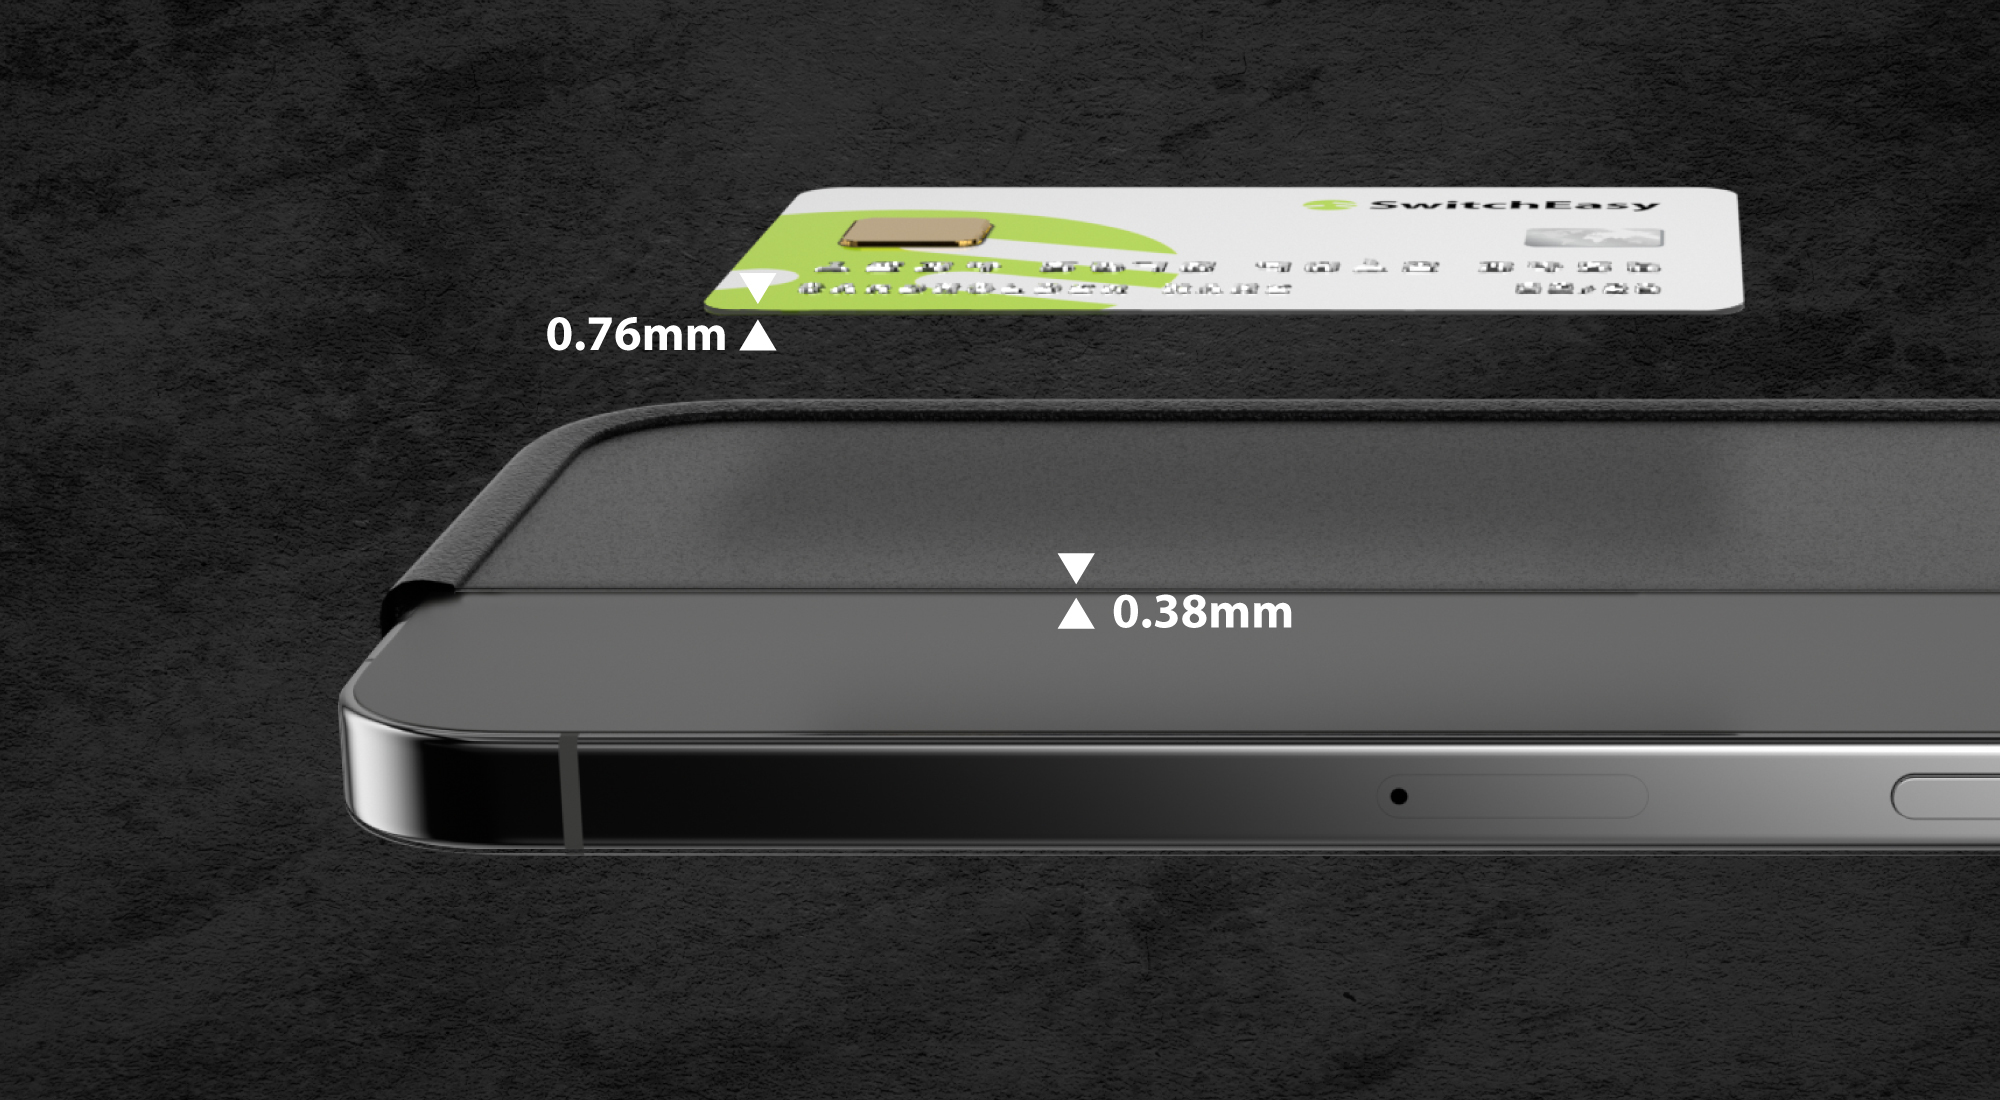 AERO Plus 極輕薄軍規防摔手機殼 for iPhone 13系列